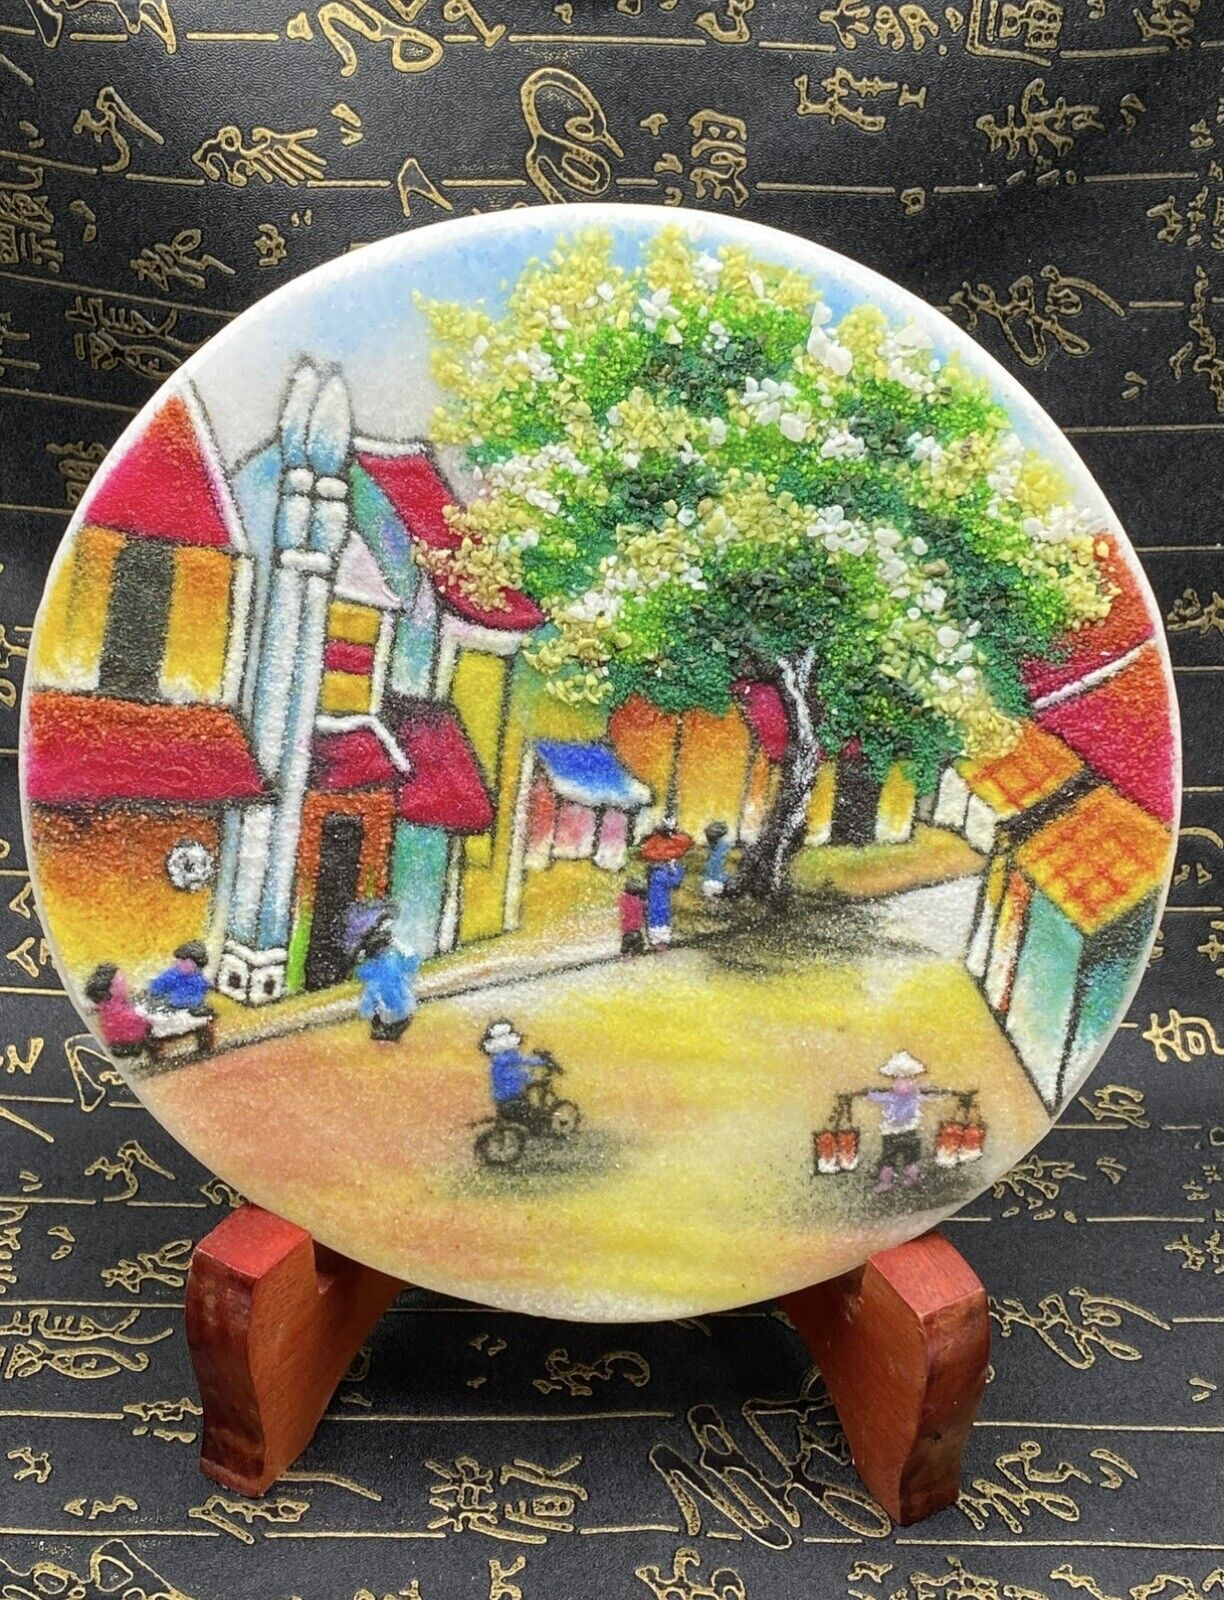 Stone painting handmade Village Vietnam,Home|Office Decor,19x19CM,3lb5oz